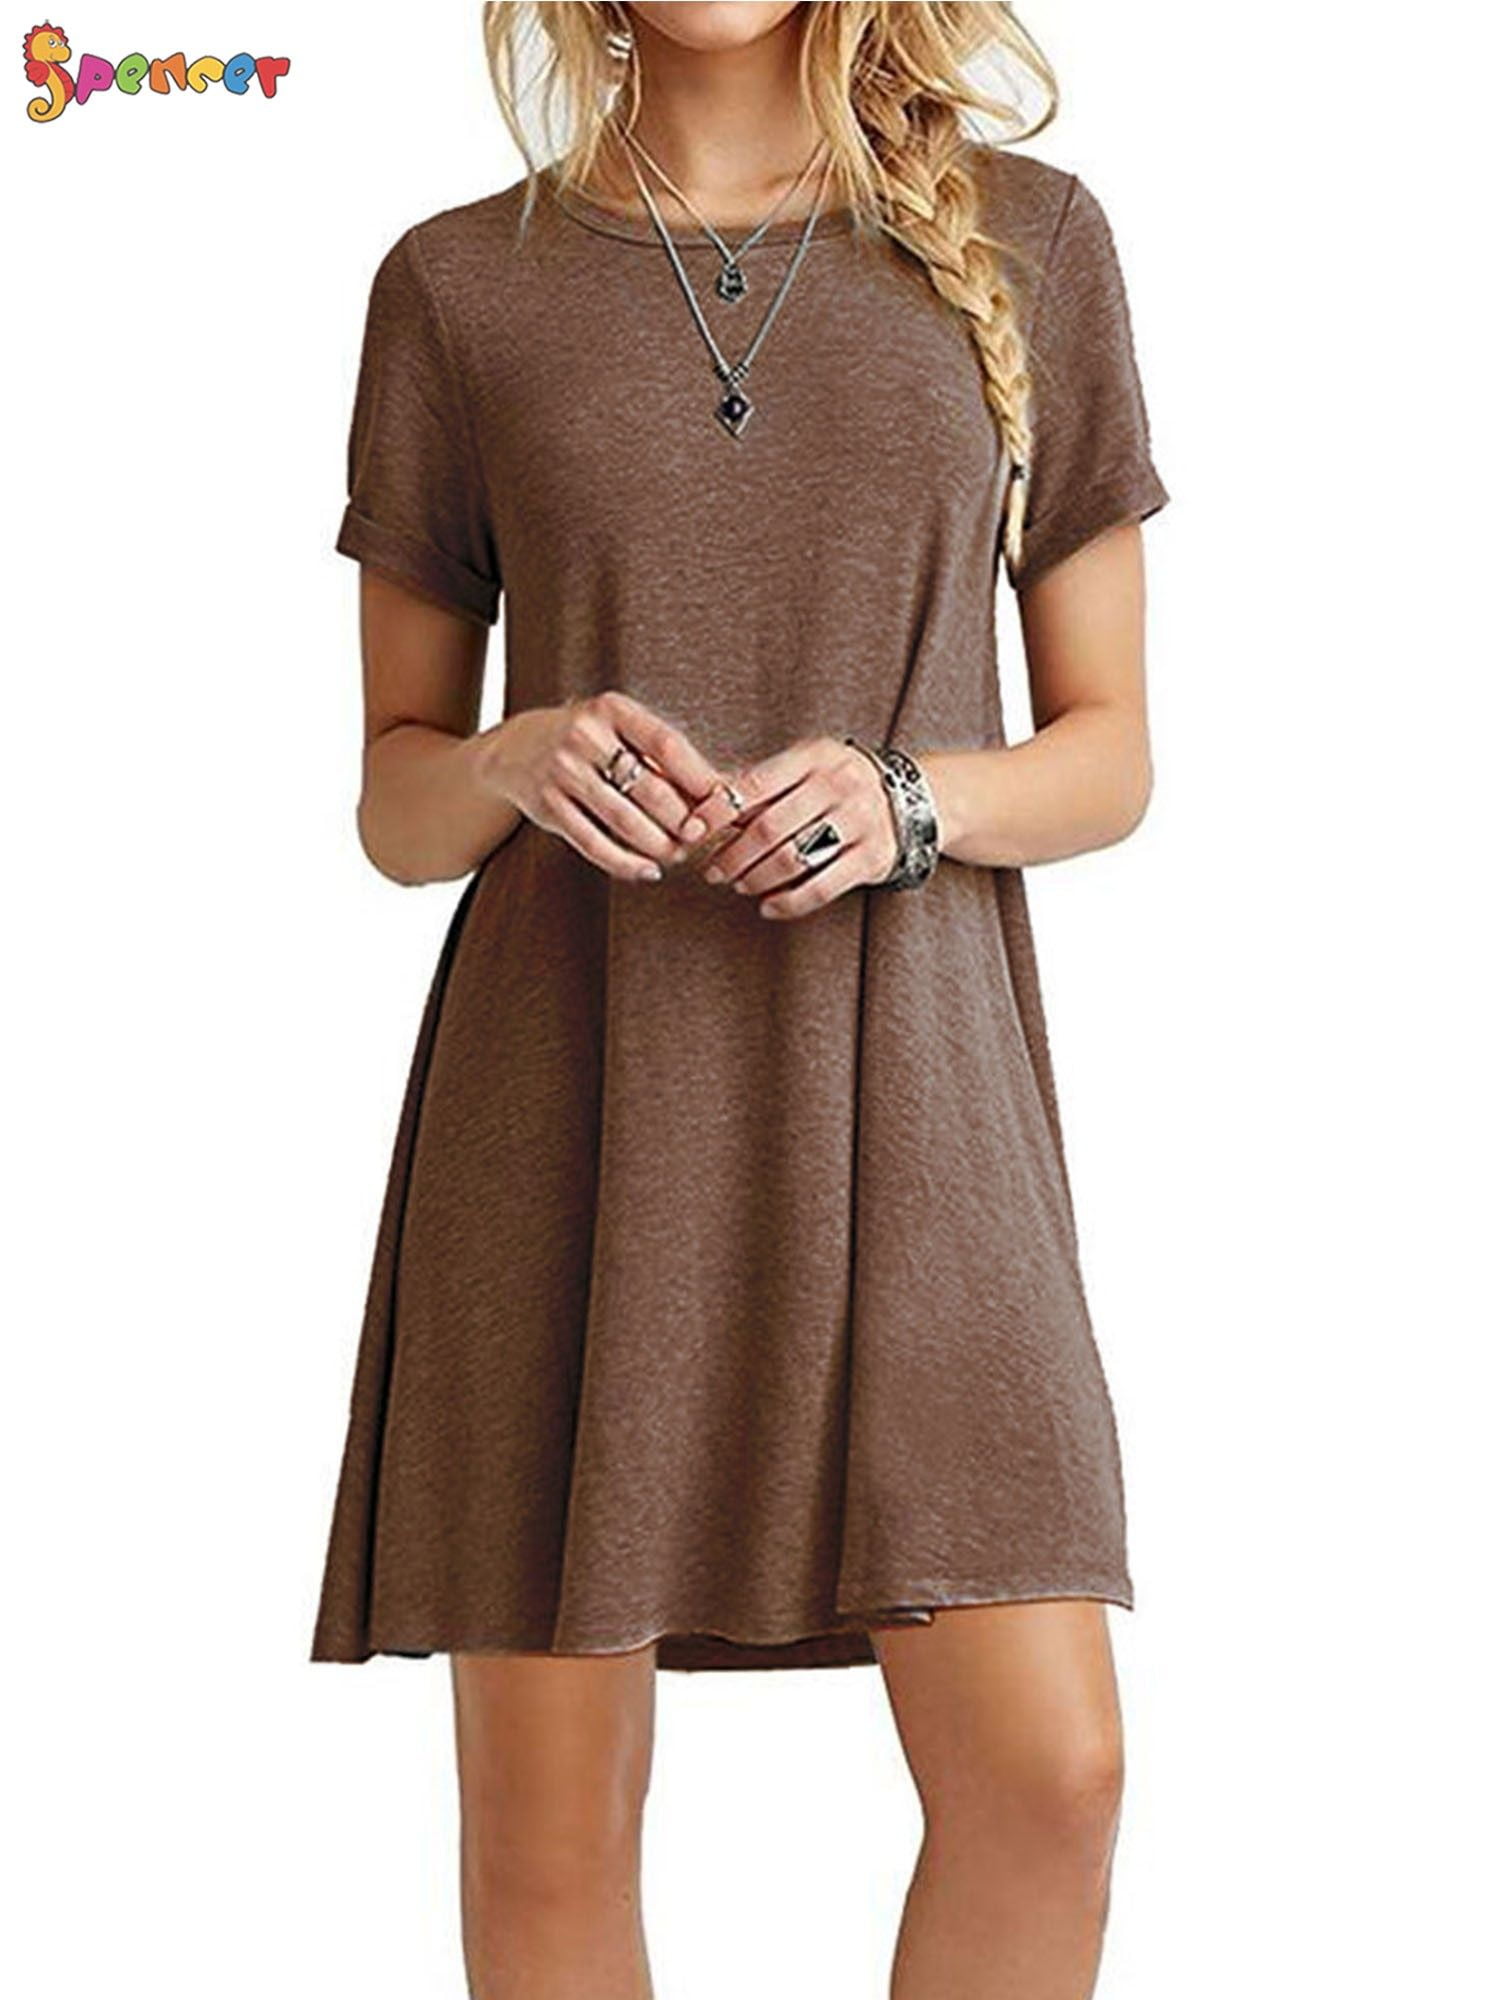 Ulanda-Dresses for Women Crewneck Short Sleeve Casual Swing Loose T-Shirt Dress with Pockets 